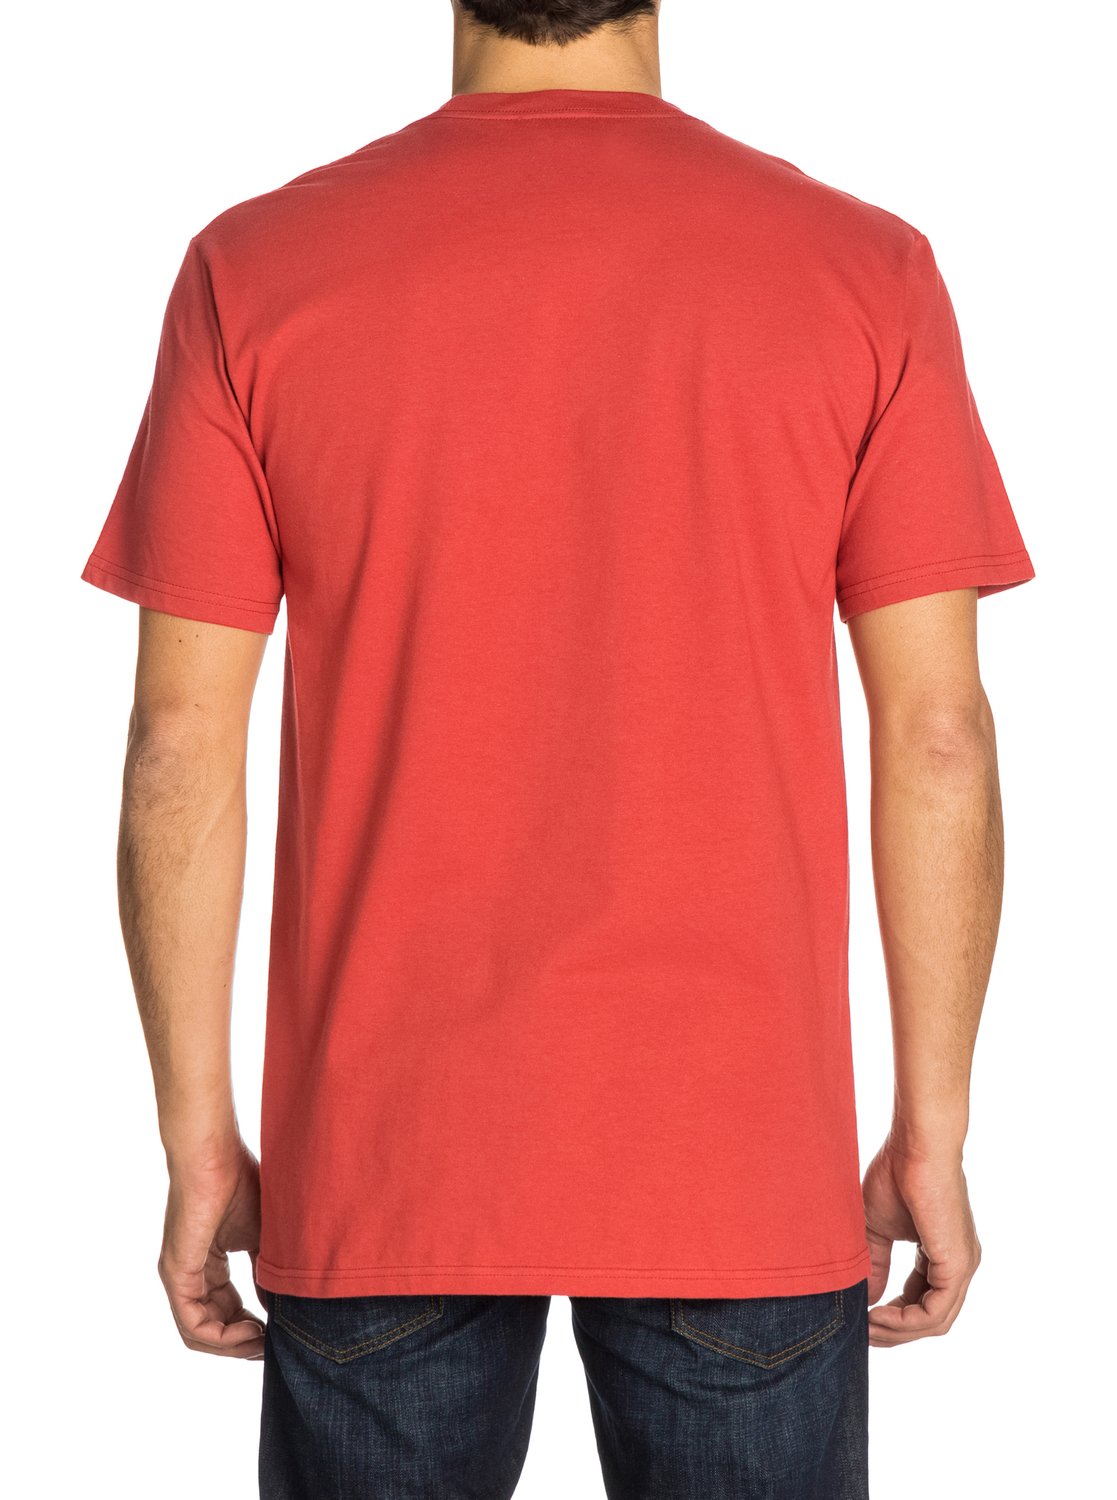 Ring Leader Slim Fit T-Shirt 888256301221 | Quiksilver